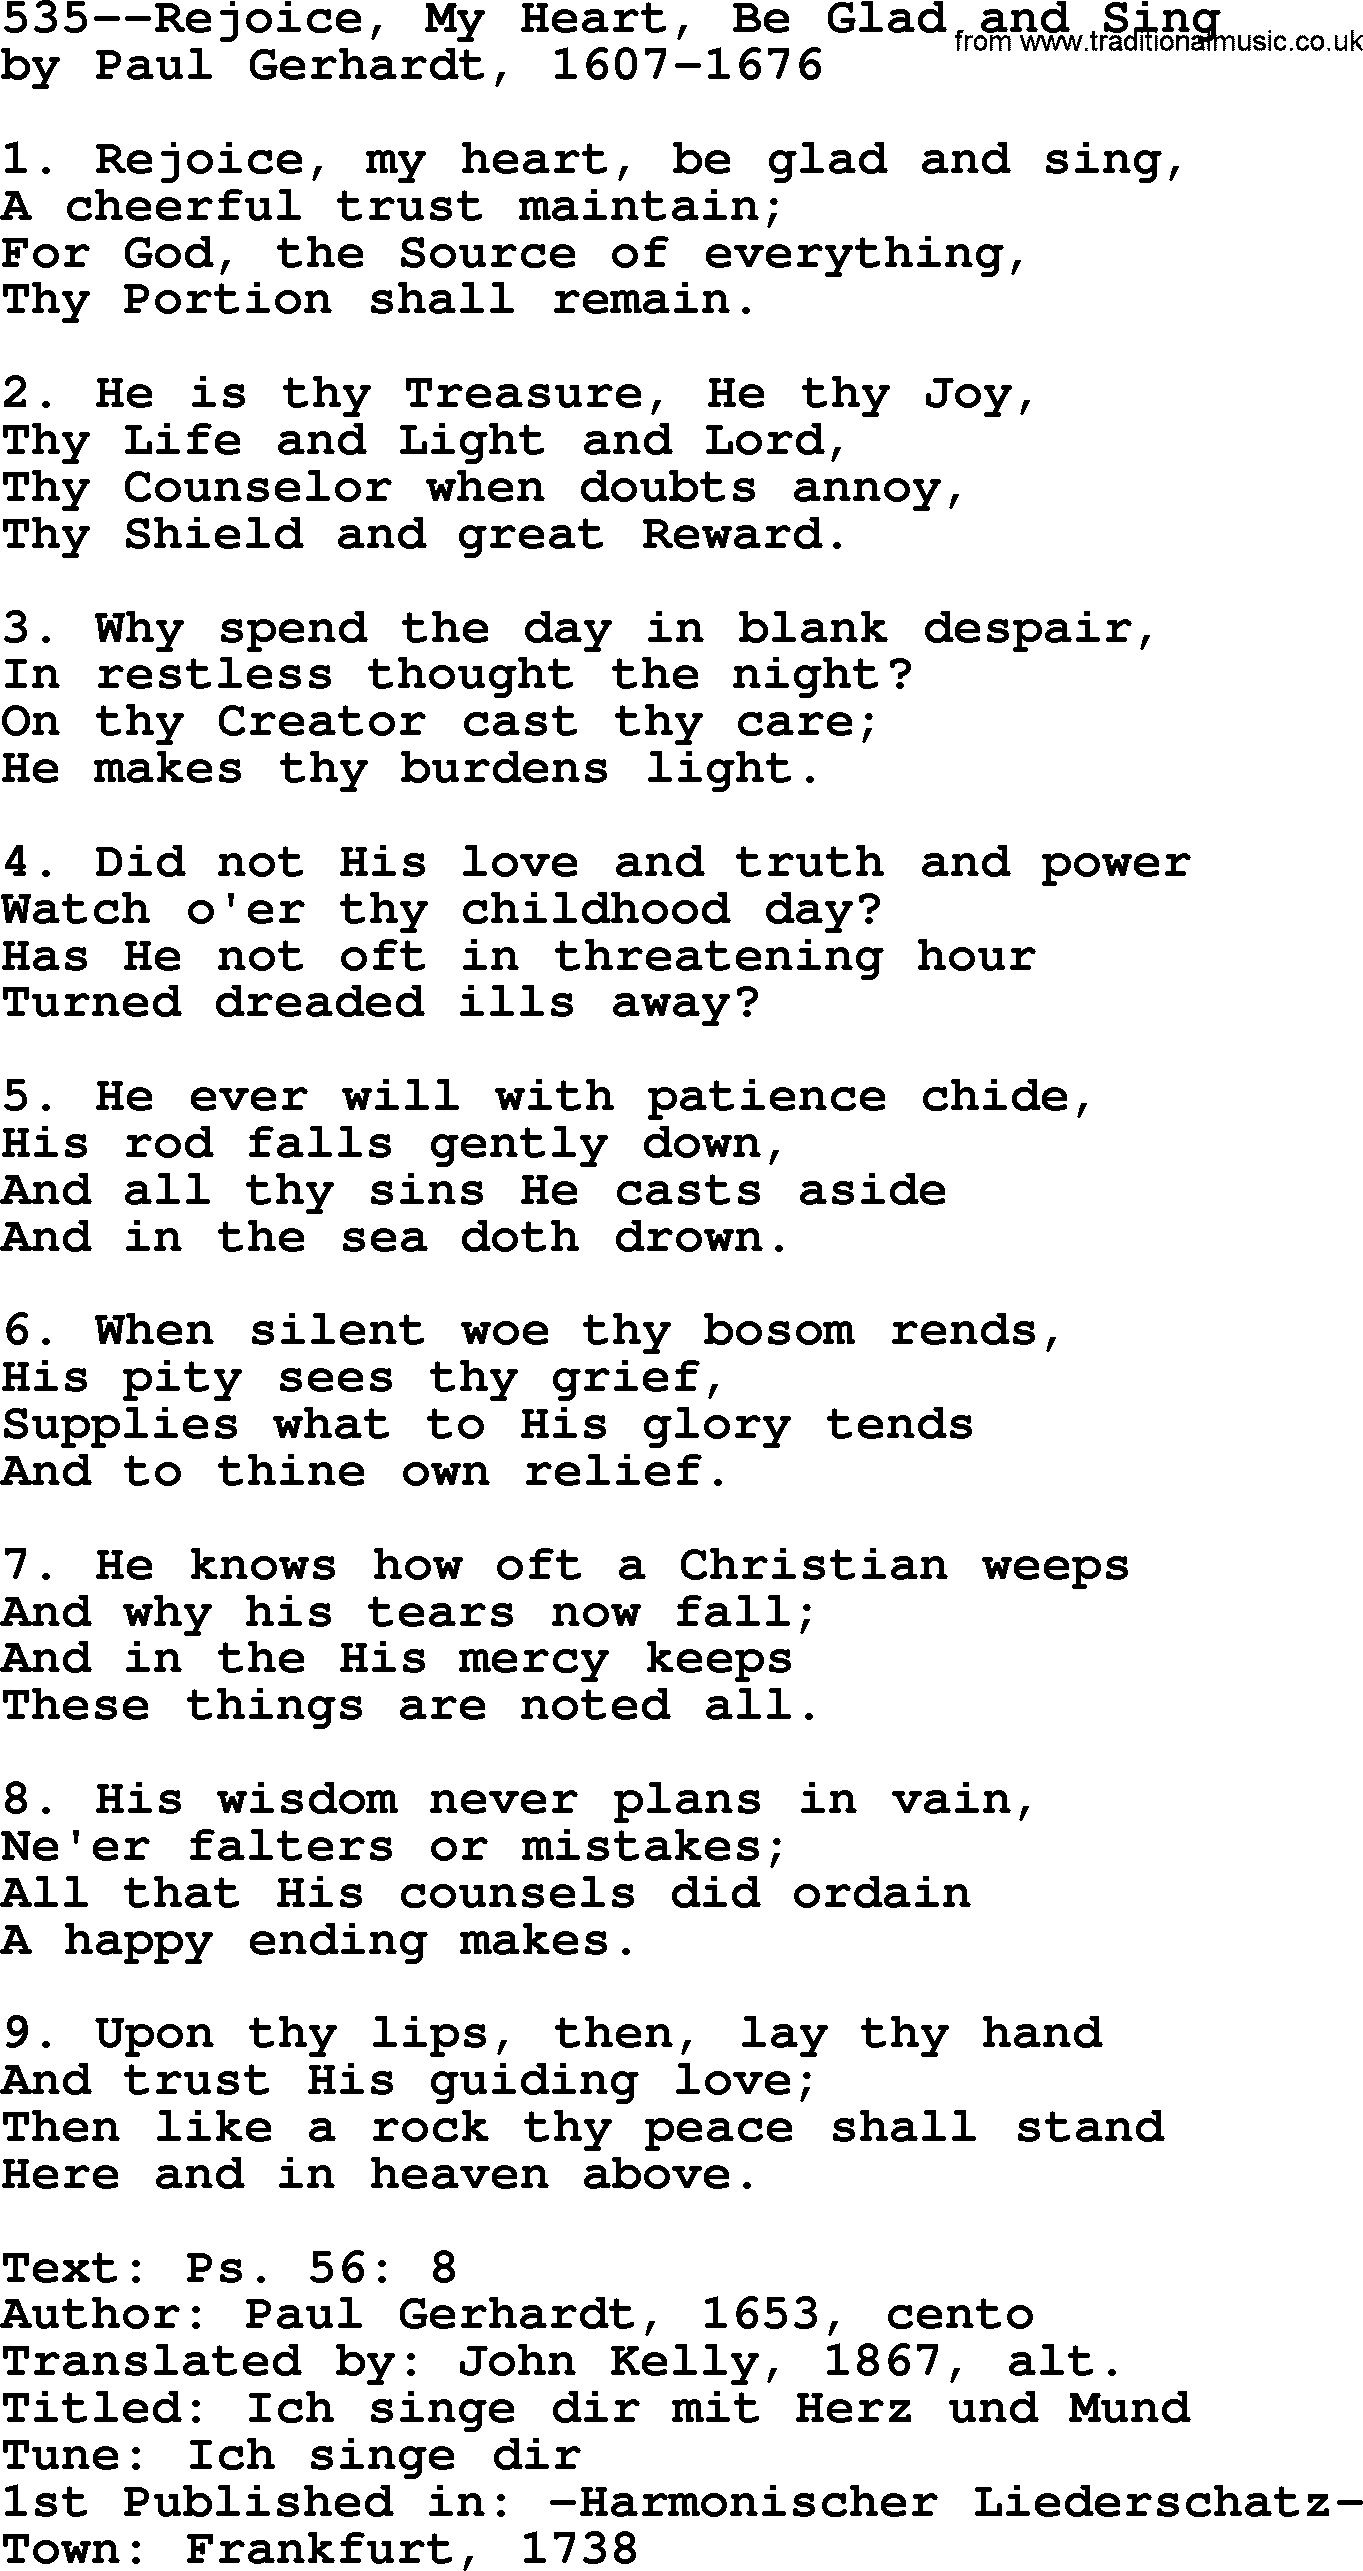 Lutheran Hymn: 535--Rejoice, My Heart, Be Glad and Sing.txt lyrics with PDF